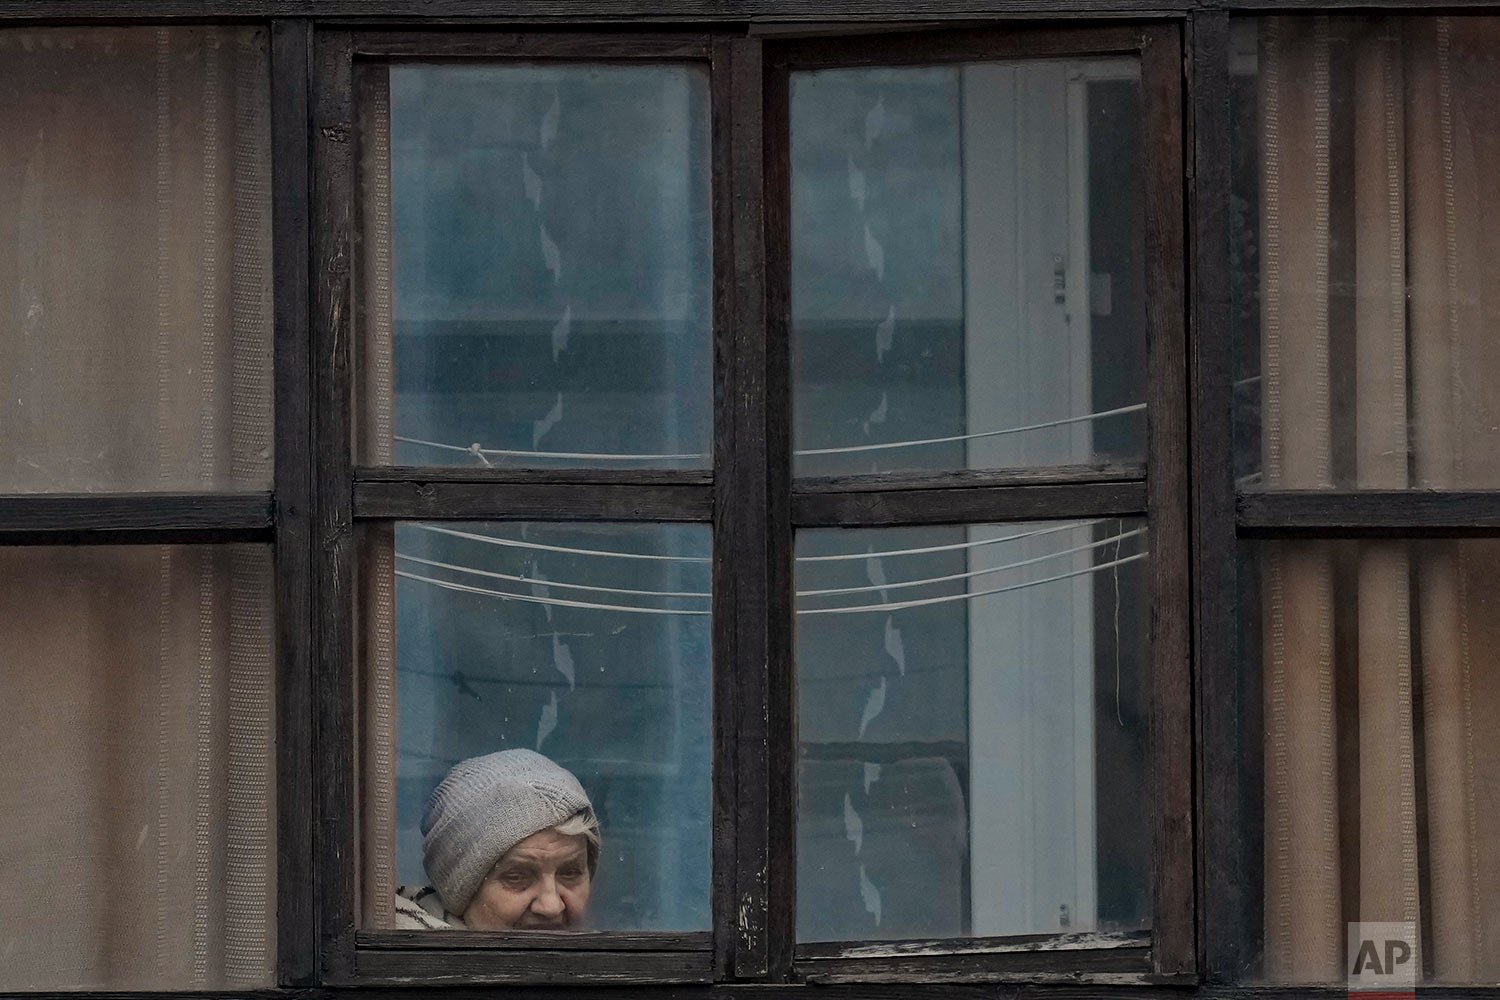  A woman looks out of the window of a balcony in Sievierodonetsk, in the Luhansk region, eastern Ukraine, Friday, Feb. 18, 2022. (AP Photo/Vadim Ghirda) 